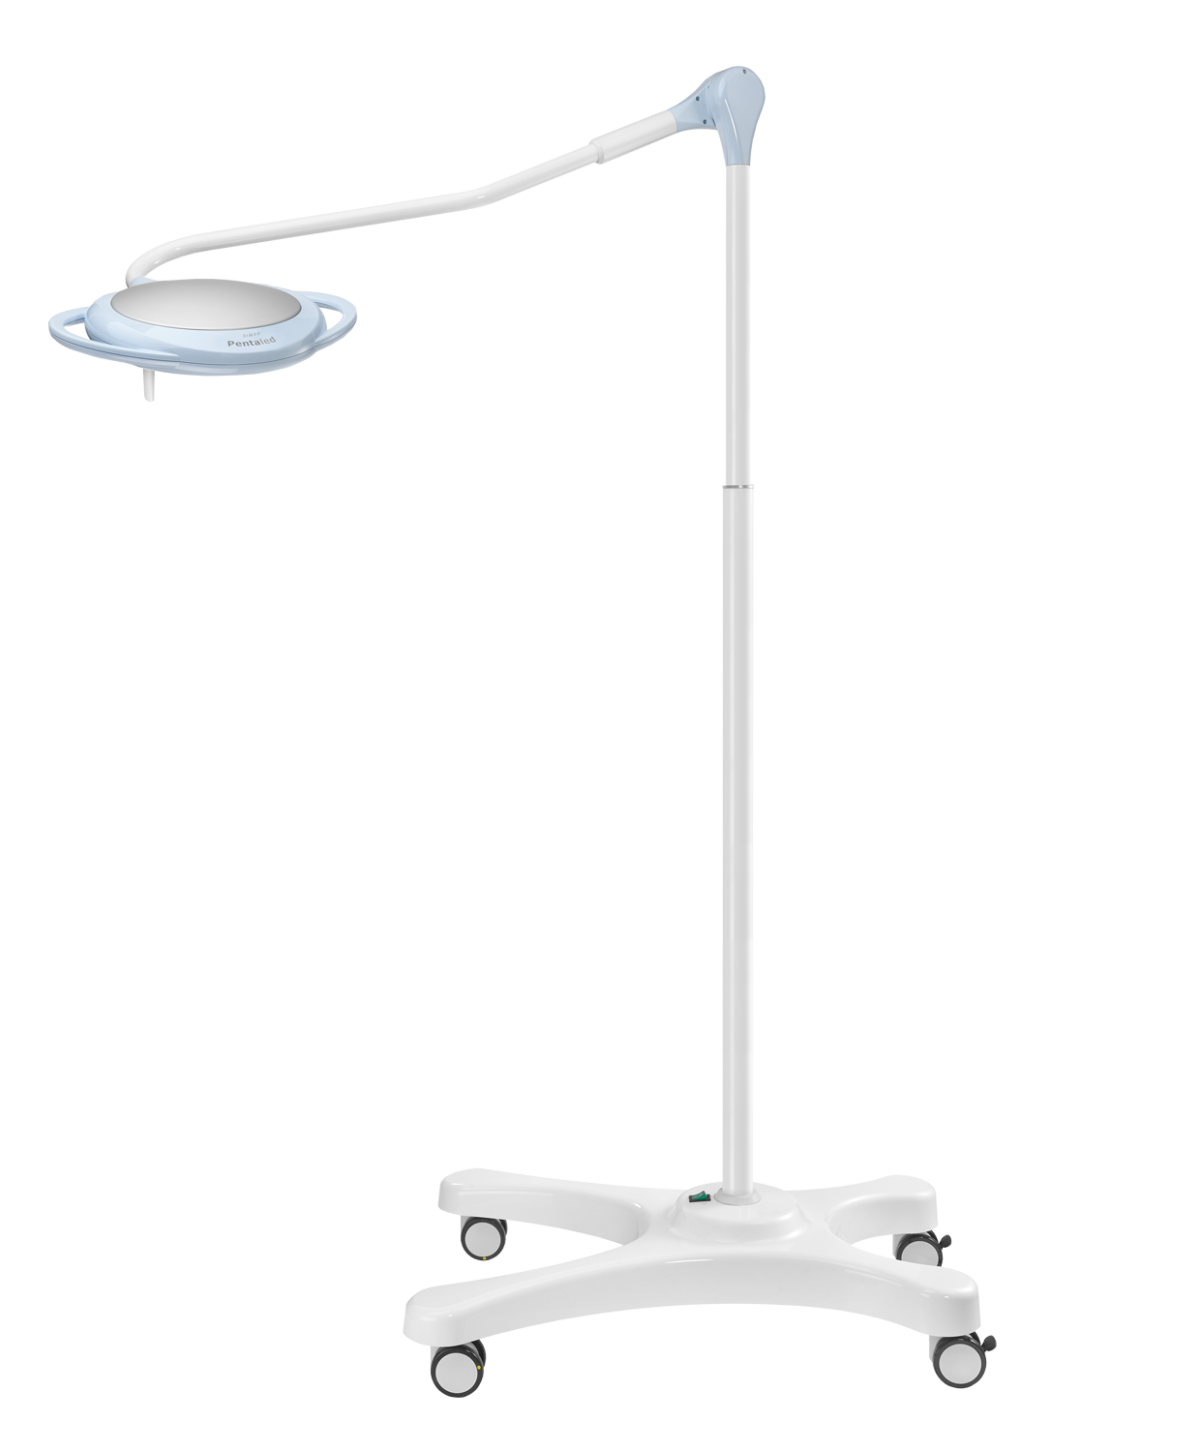 Mobile surgical light led lamp Pentaled 12 Pentaled 28 Rimsa medical equipment hospital clinic